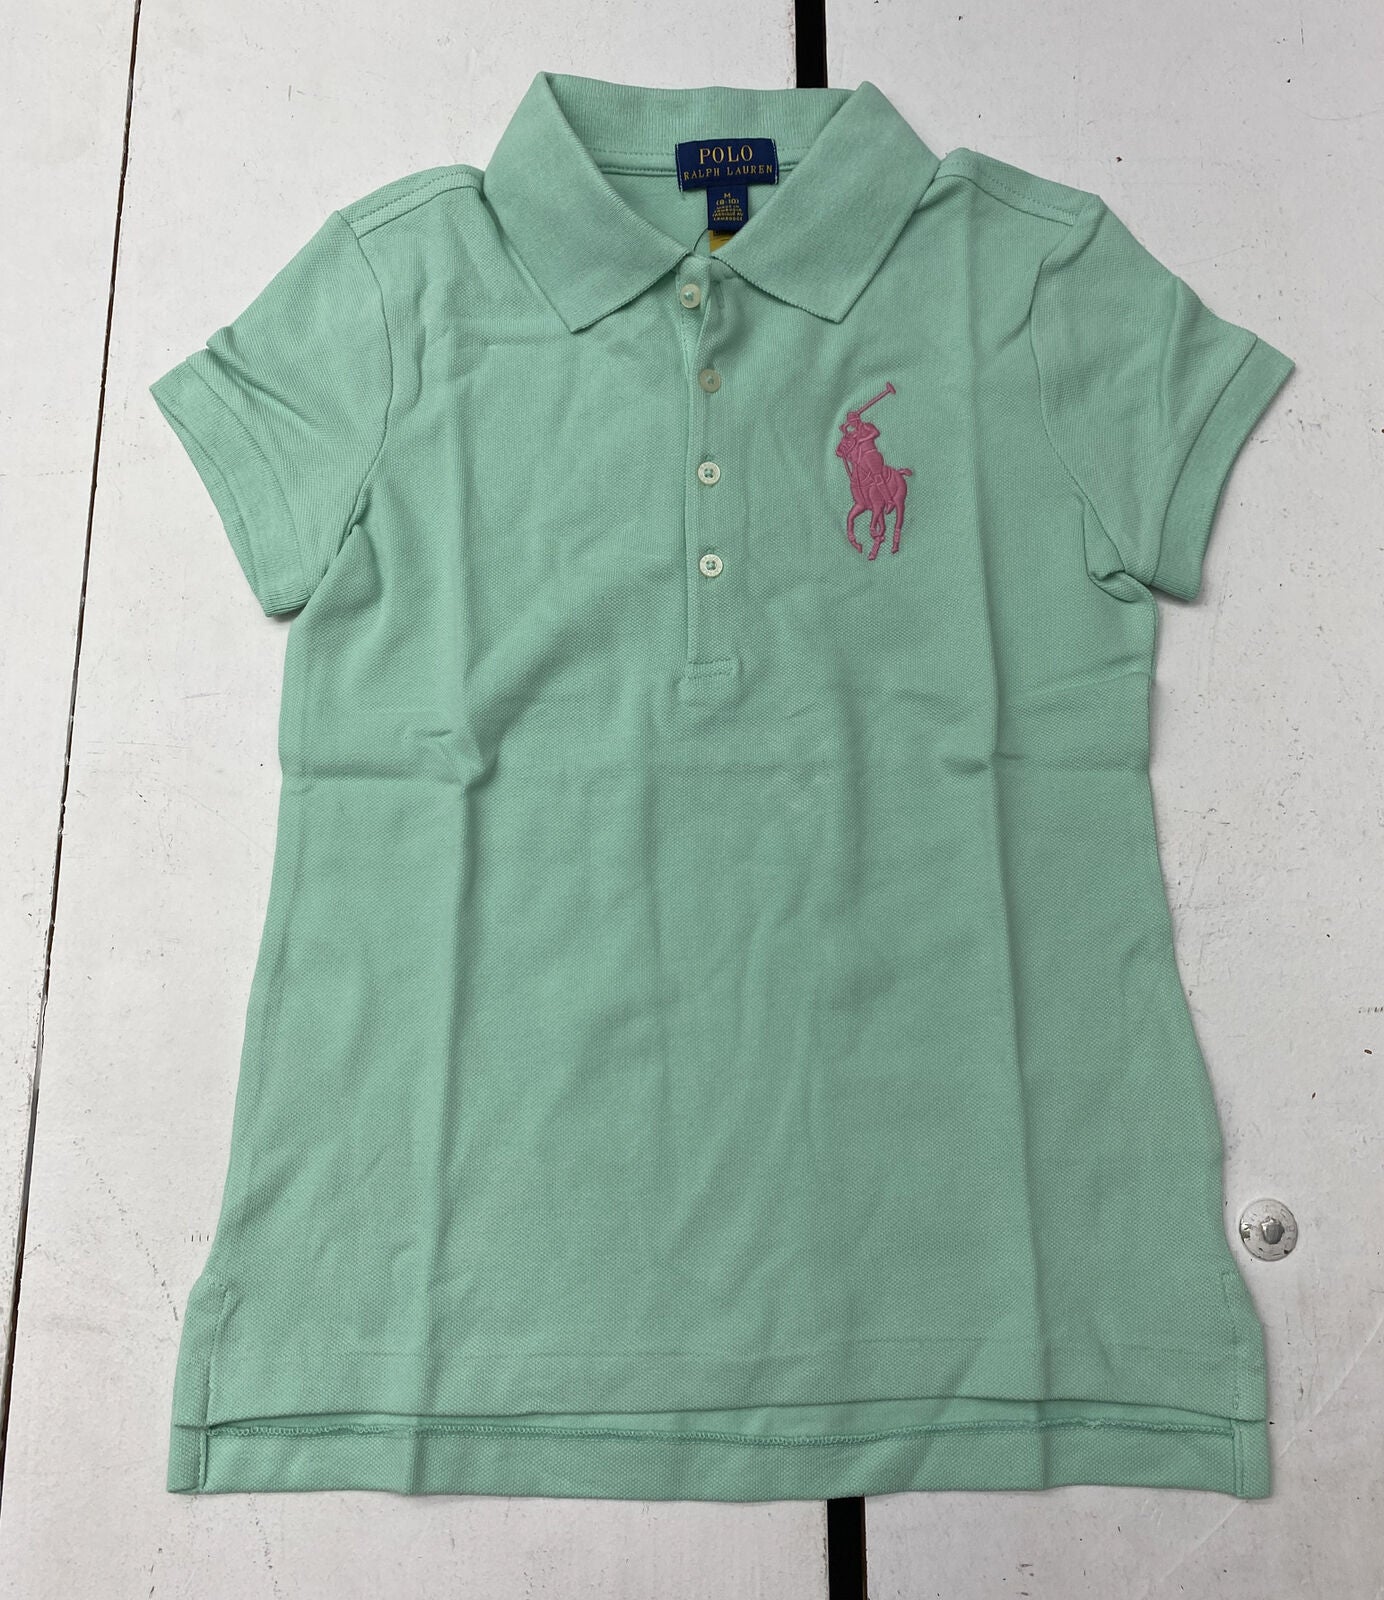 Polo Ralph Lauren Aqua Green Classic Fit Youth Girls Size Medium(8-10) New